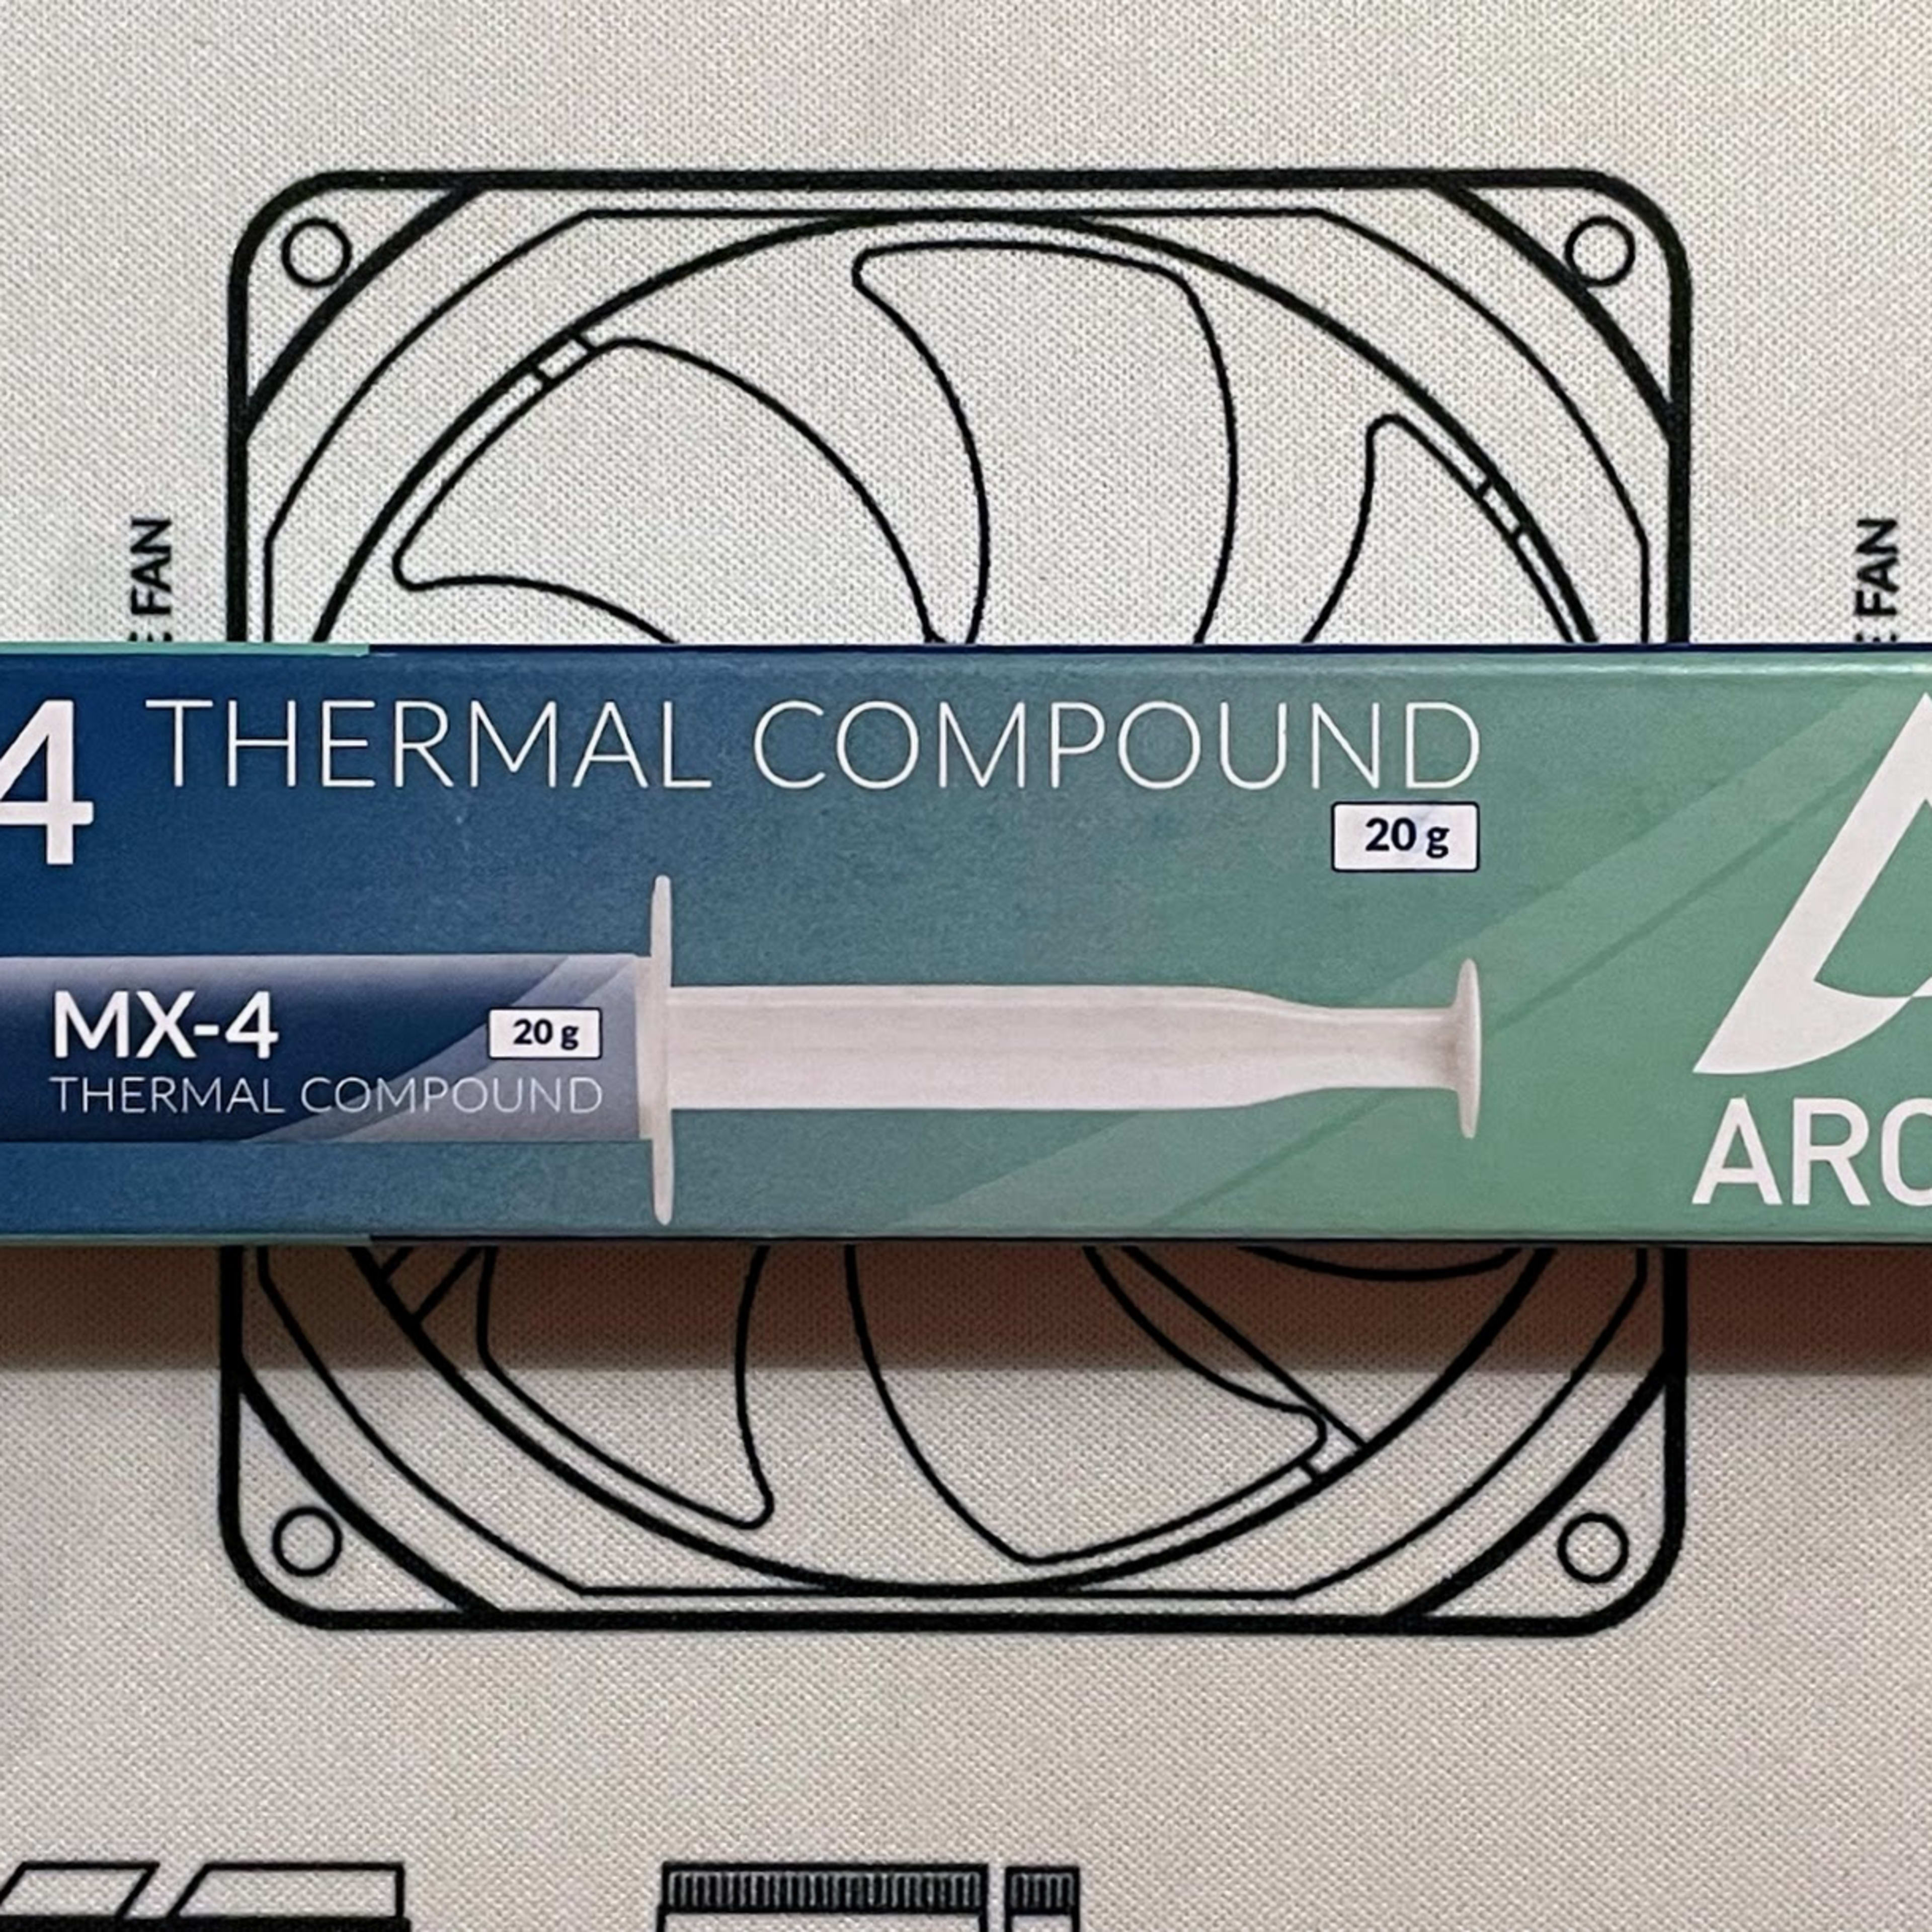 Arctic MX-4 20g Non-Conductive Thermal Paste